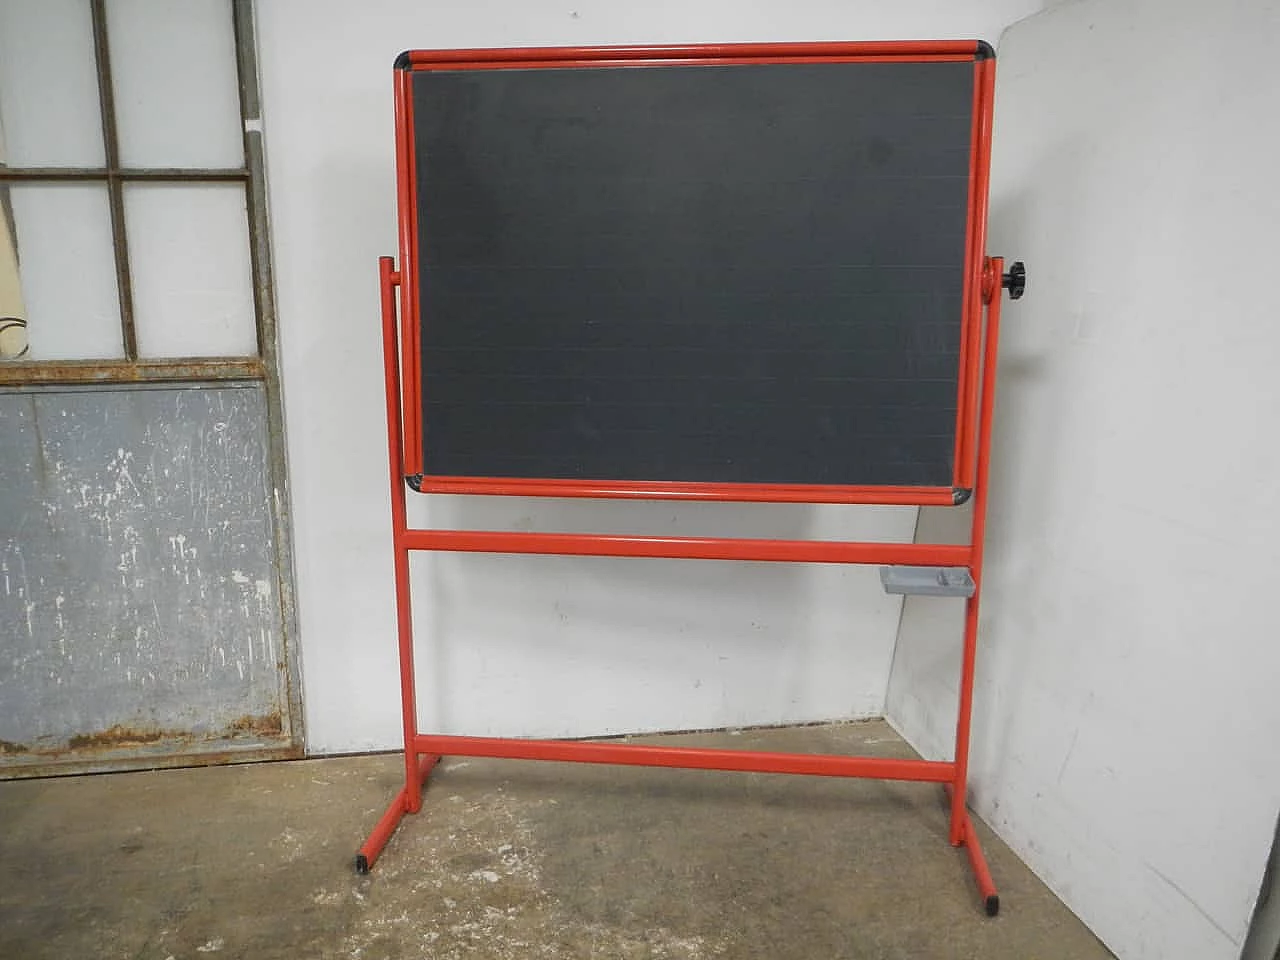 Slate school blackboard with red metal frame, 1980s 1